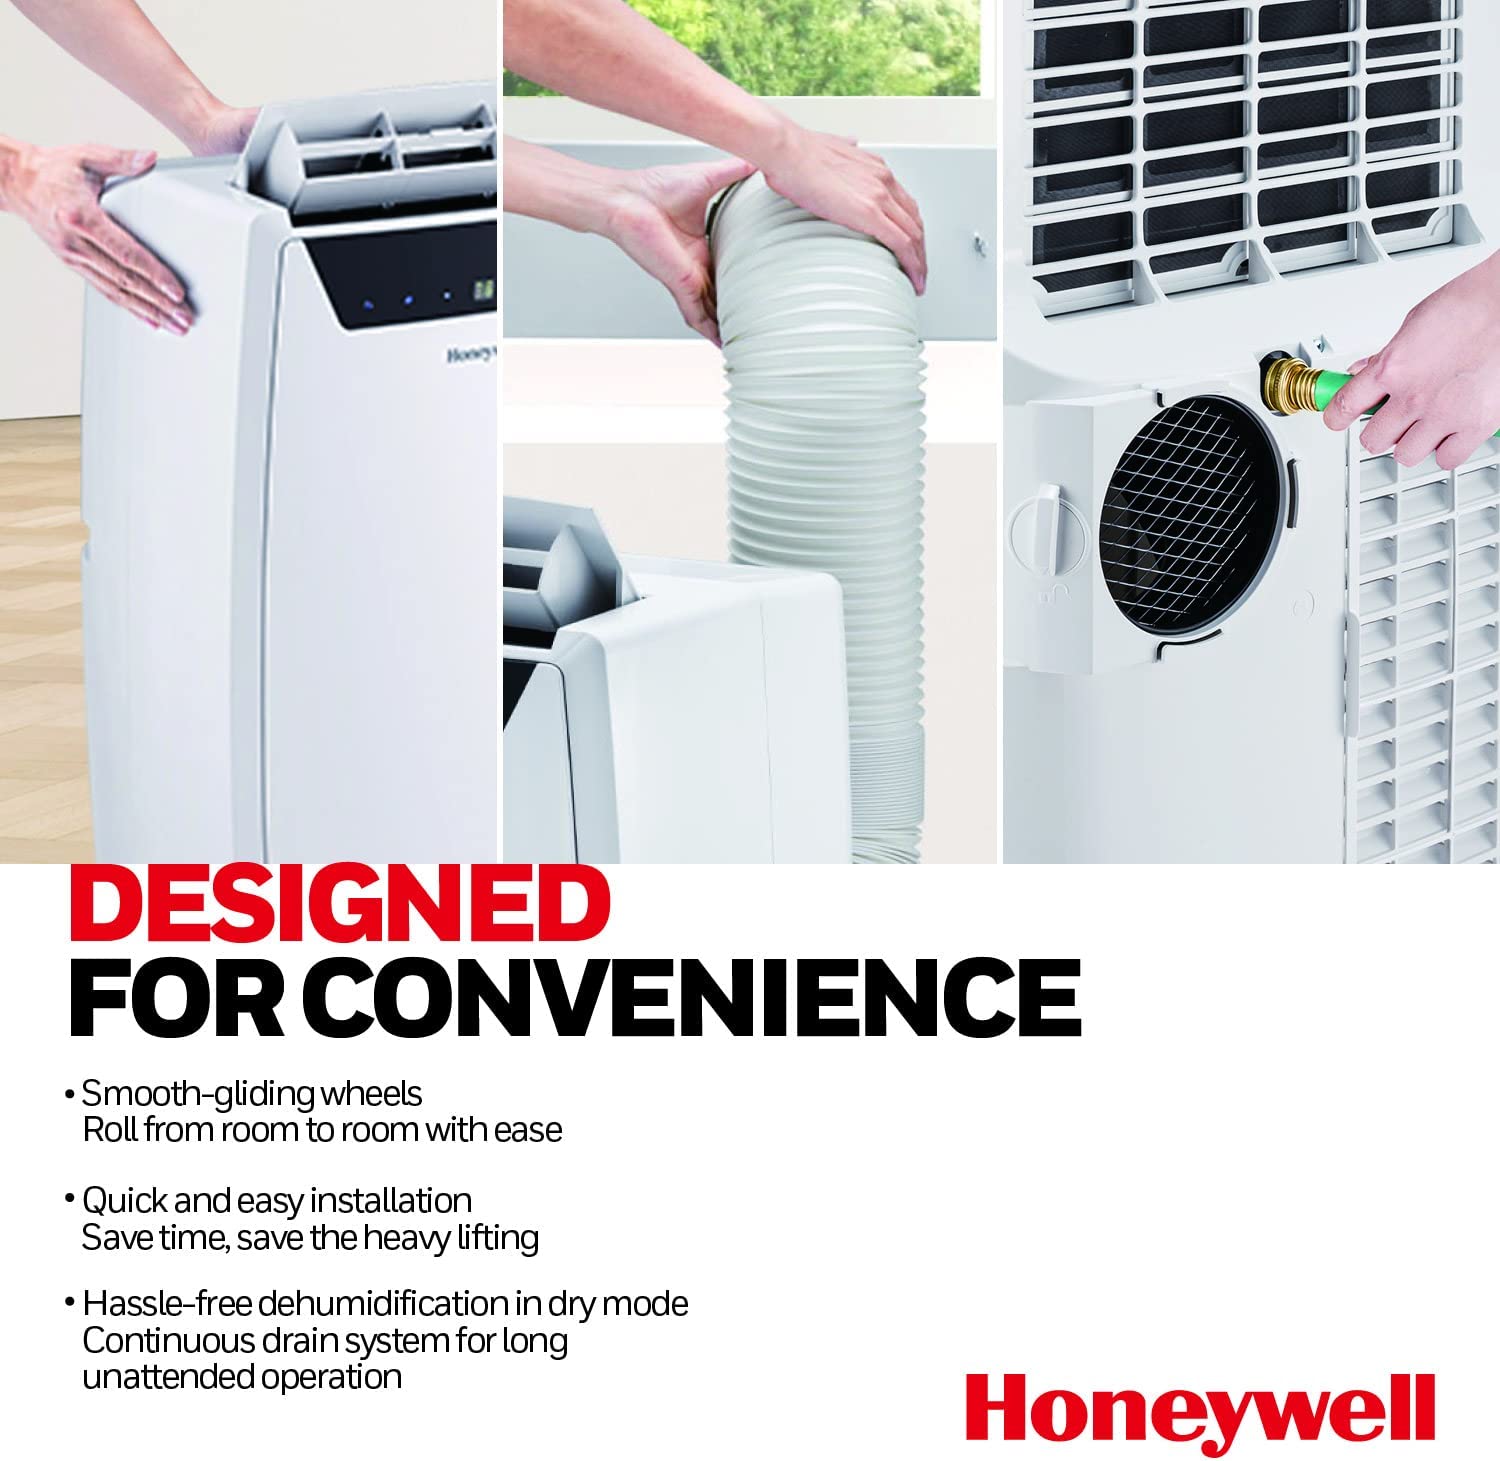 Honeywell R-MN4CFSWW9 14,000 BTU Portable Air Conditioner, Dehumidifier & Fan White - Certified Refurbished